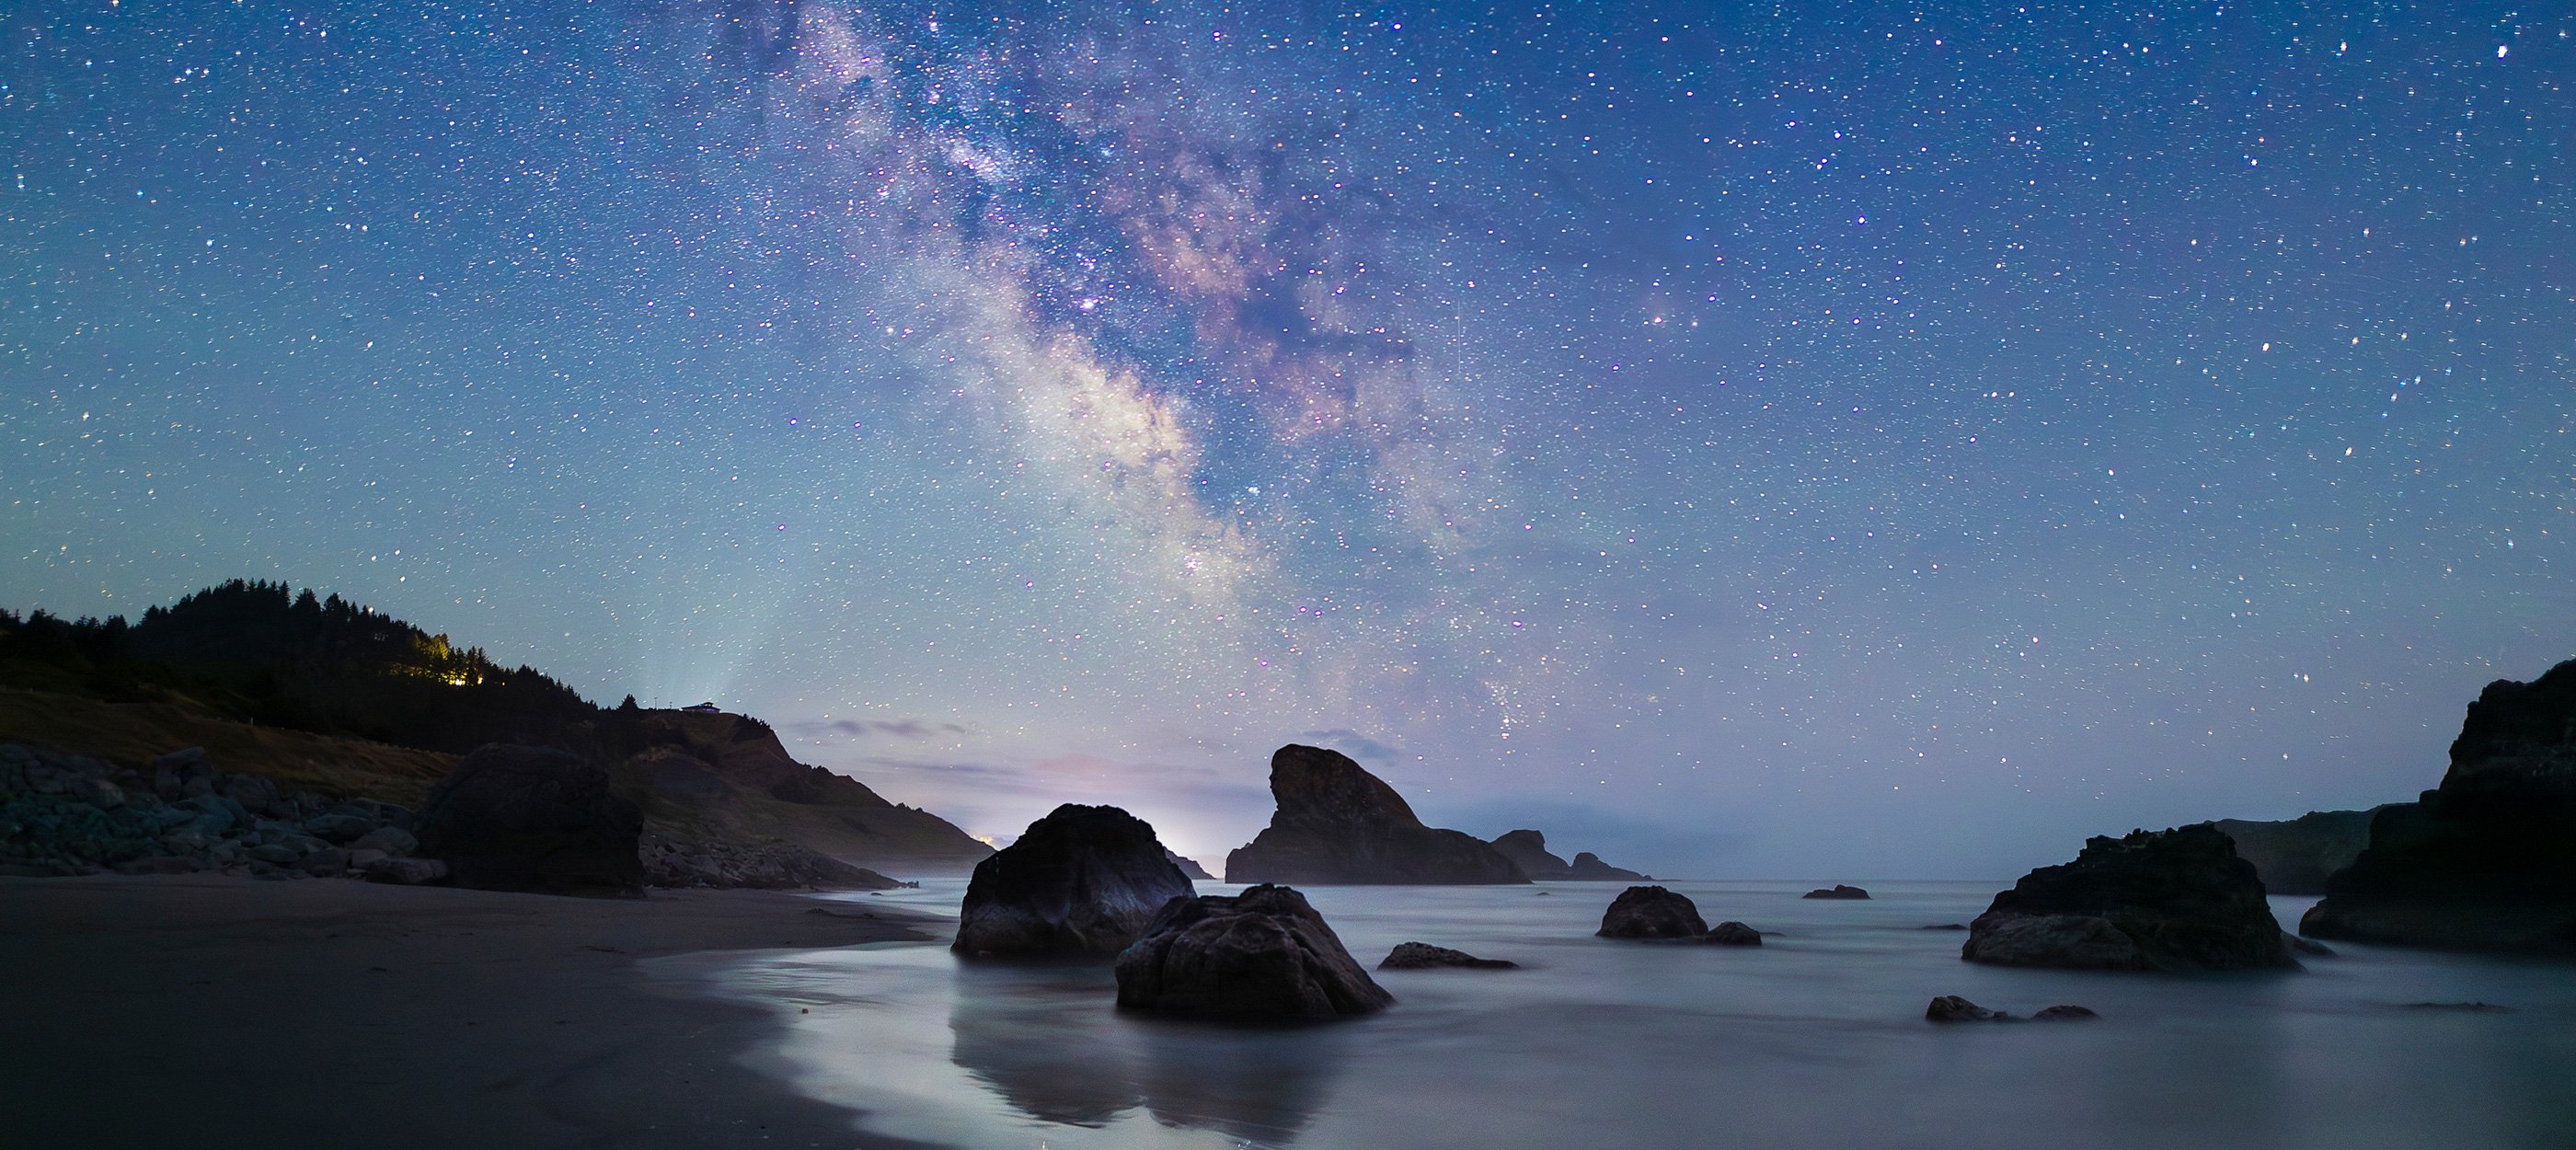 Milky Way over beach scene.